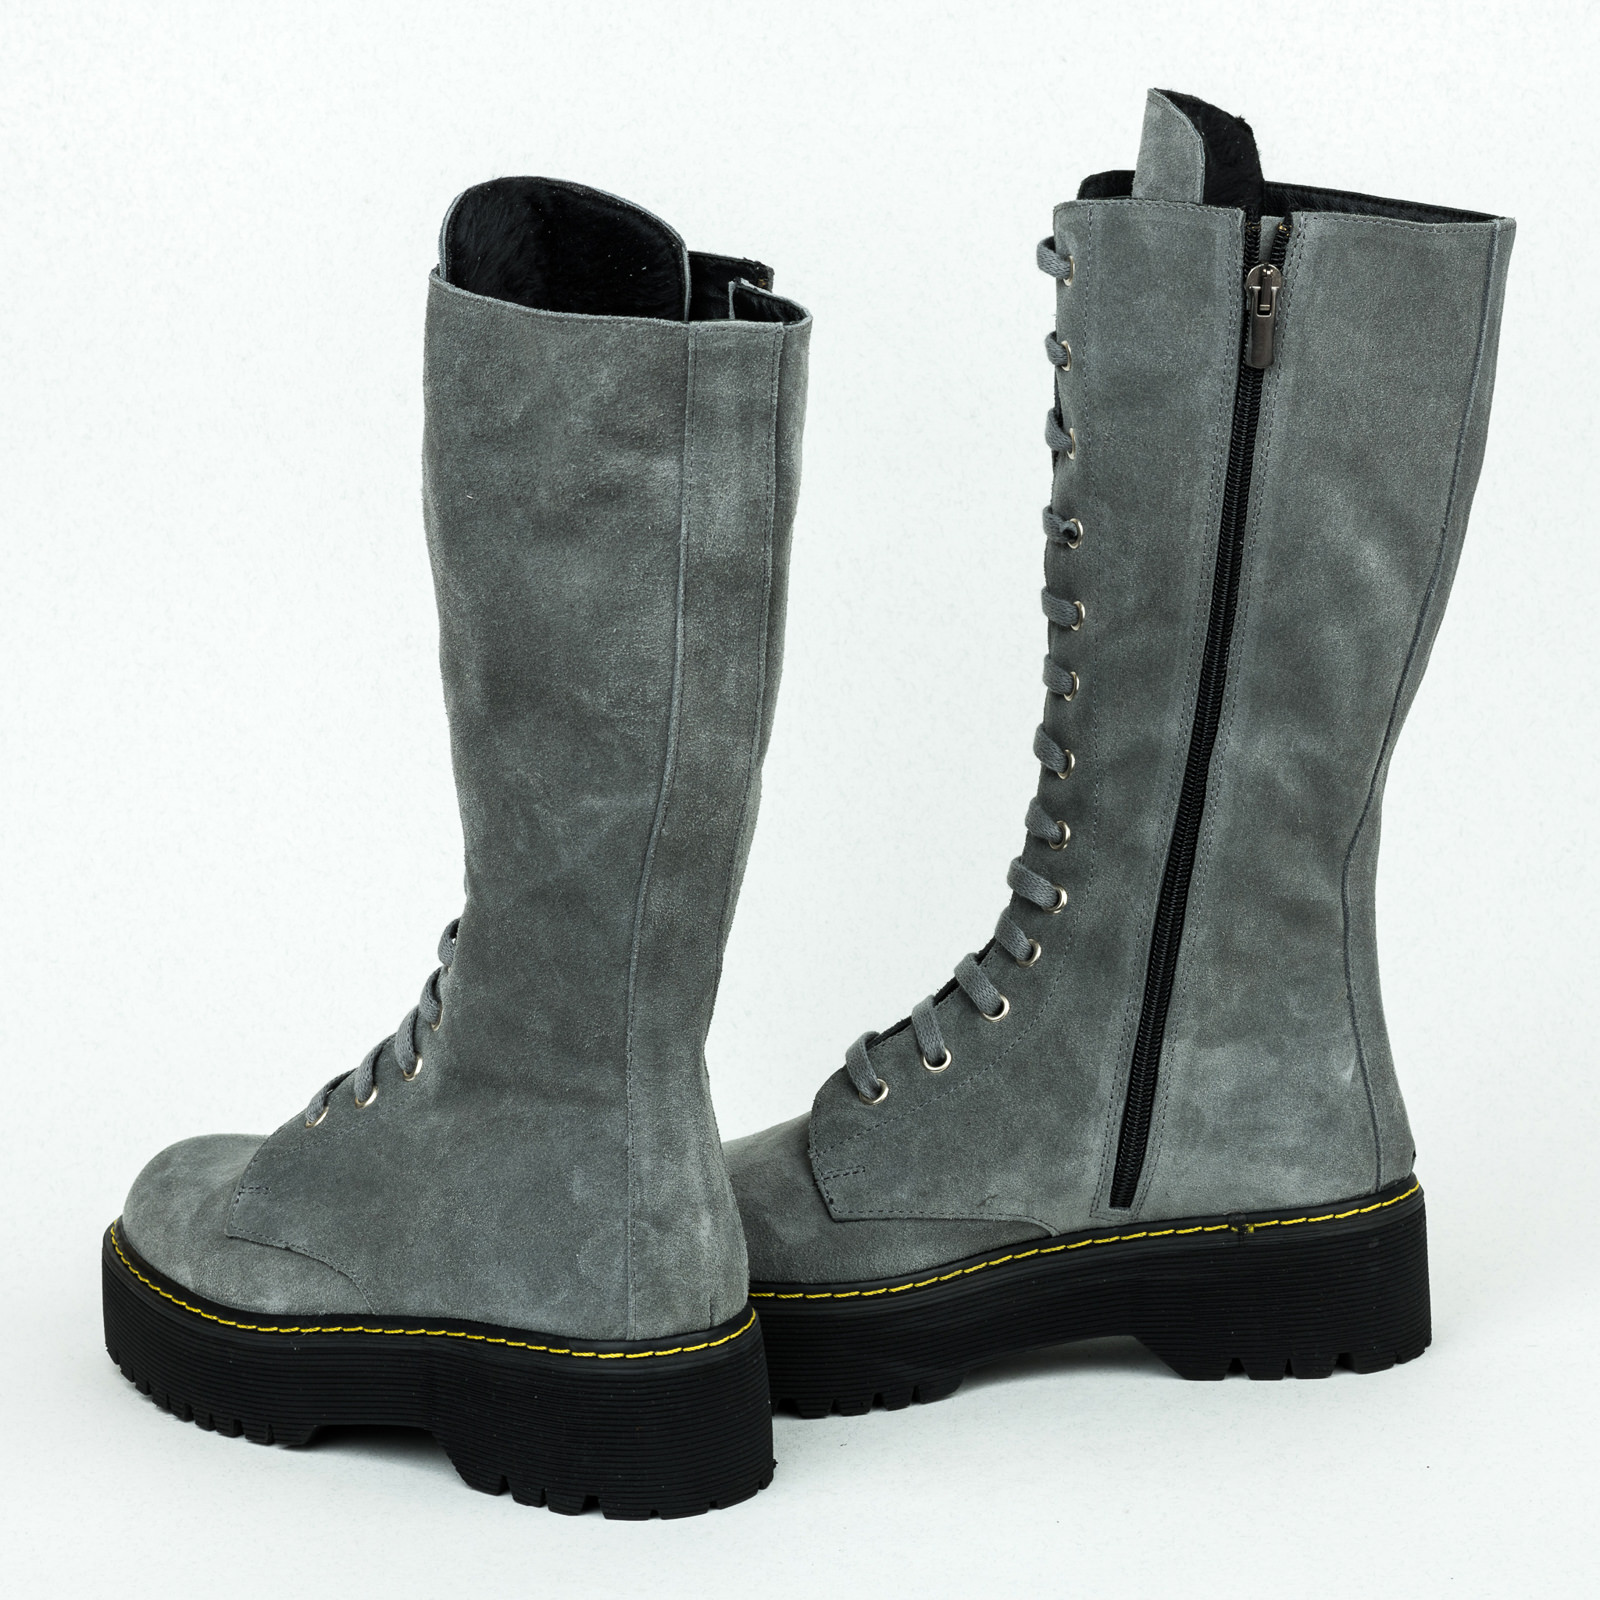 Leather WATERPROOF footwear LIBBY - GREY